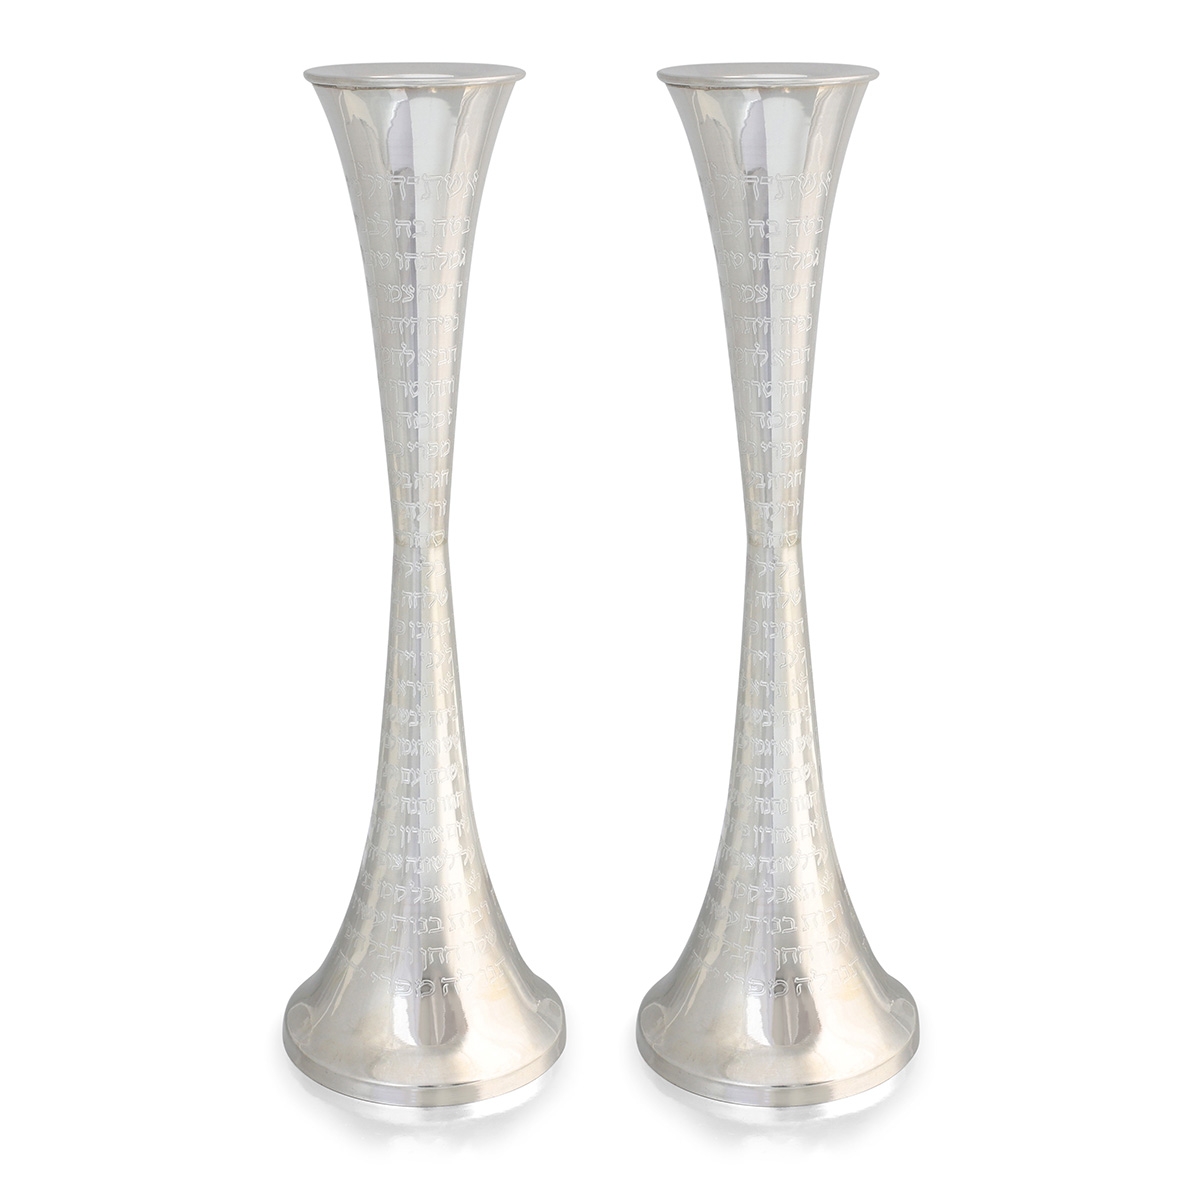 Sterling Silver Eshet Chayil Candlesticks - Hourglass Design - 1